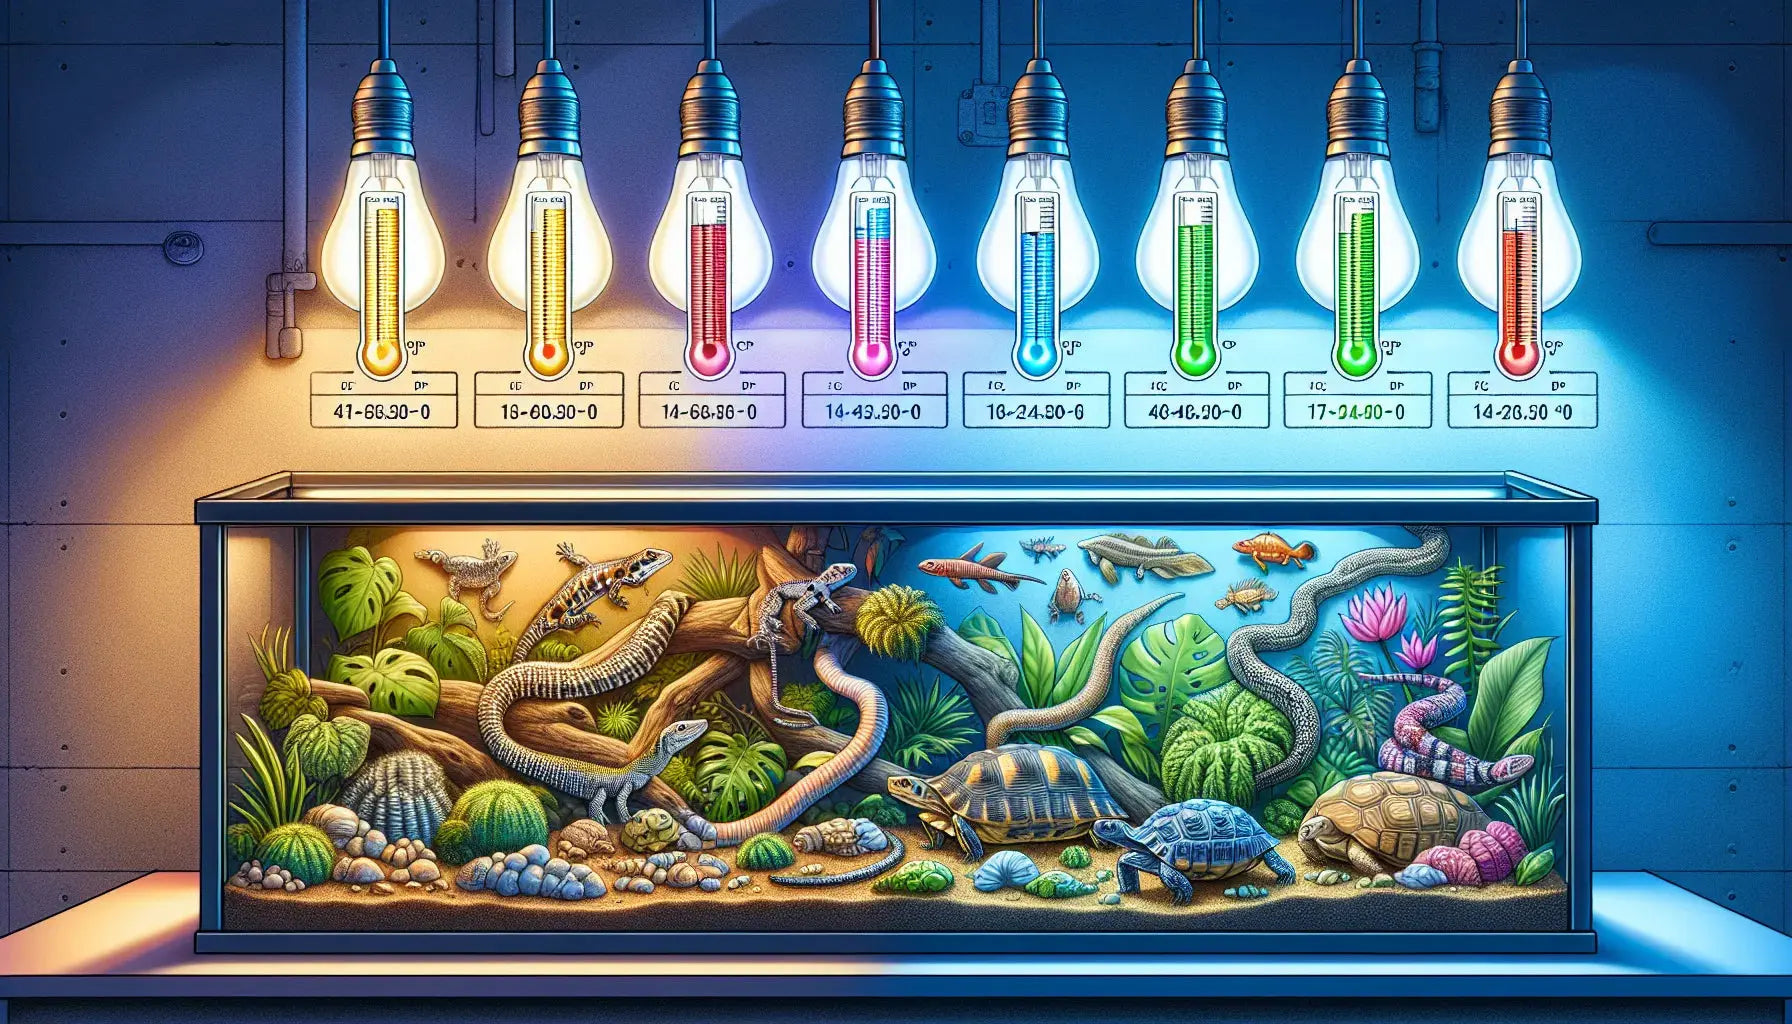 Choosing the Right Reptile Light Bulbs for Your Terrarium Setup